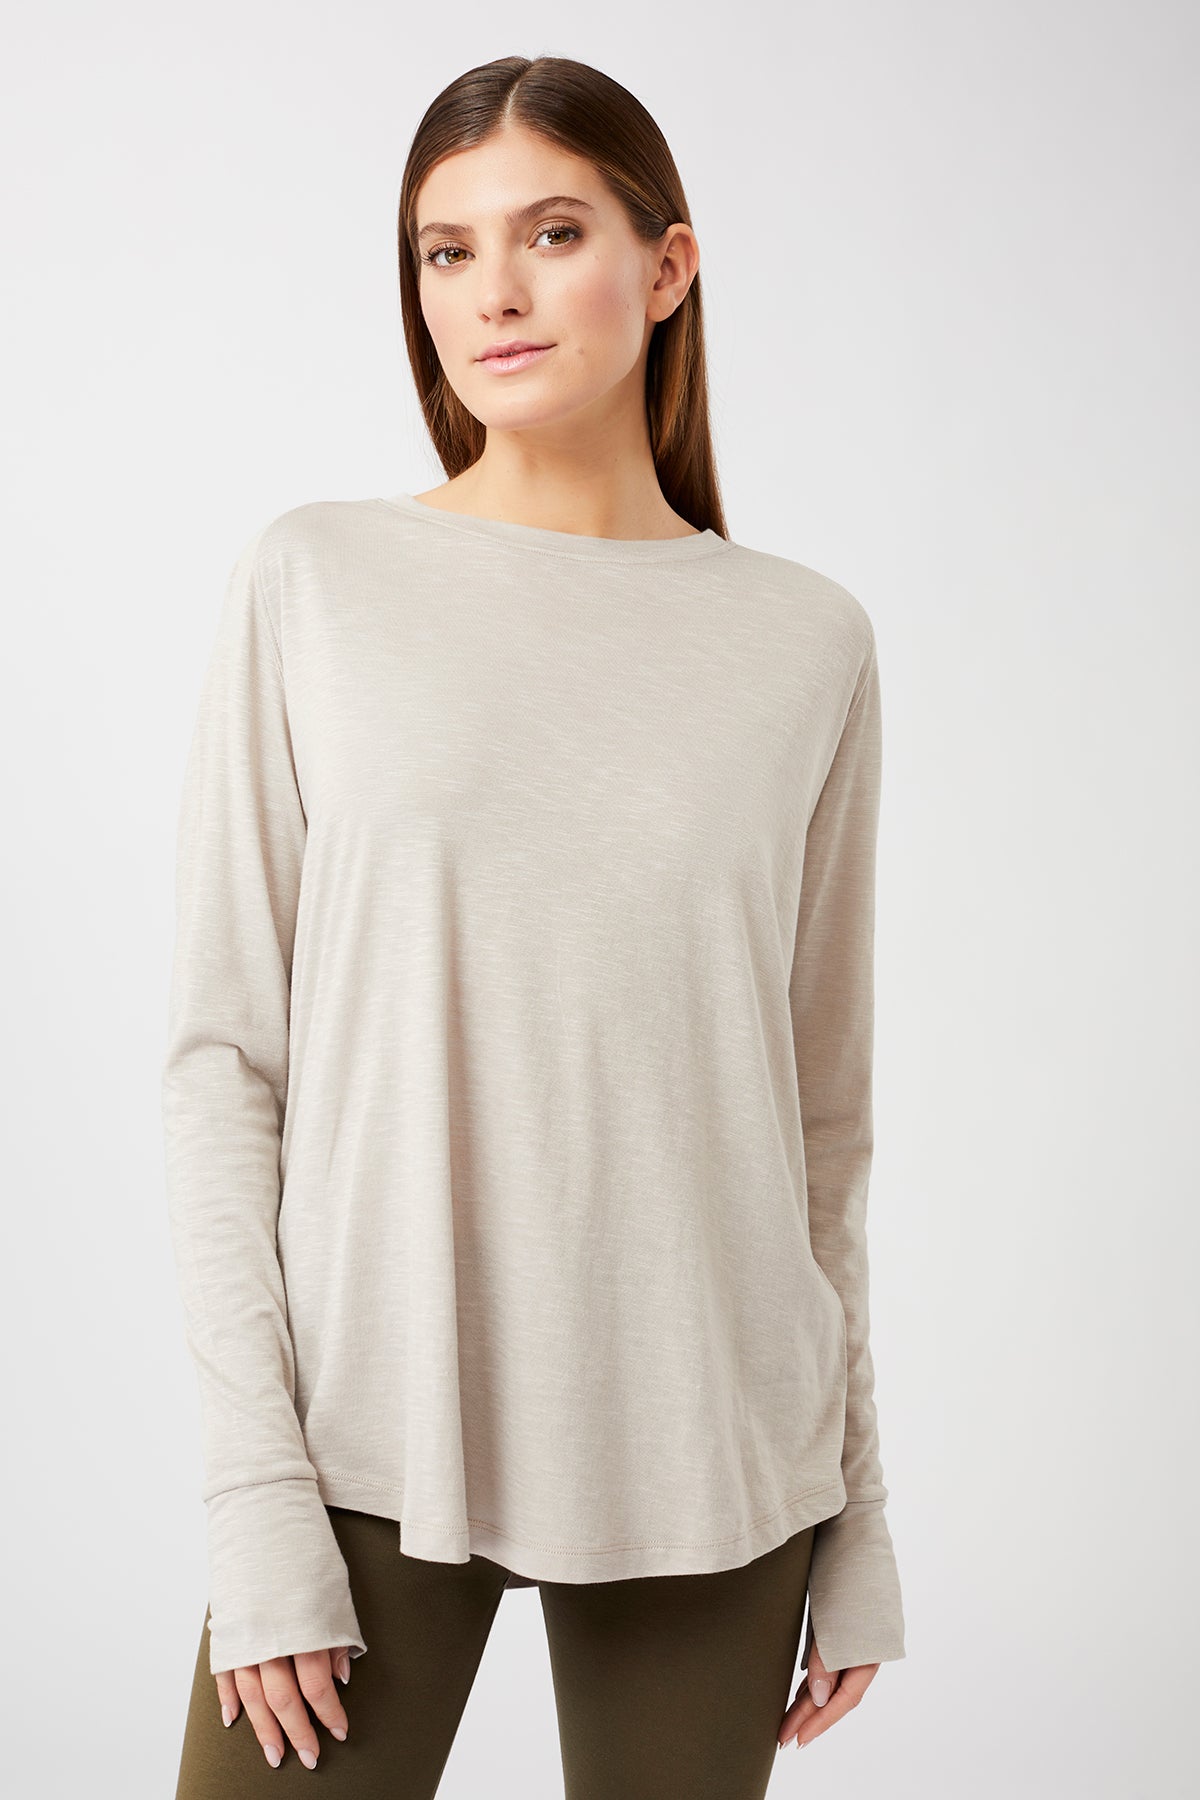 Mandala Yoga Shirt Beige Front - Active Long Sleeve